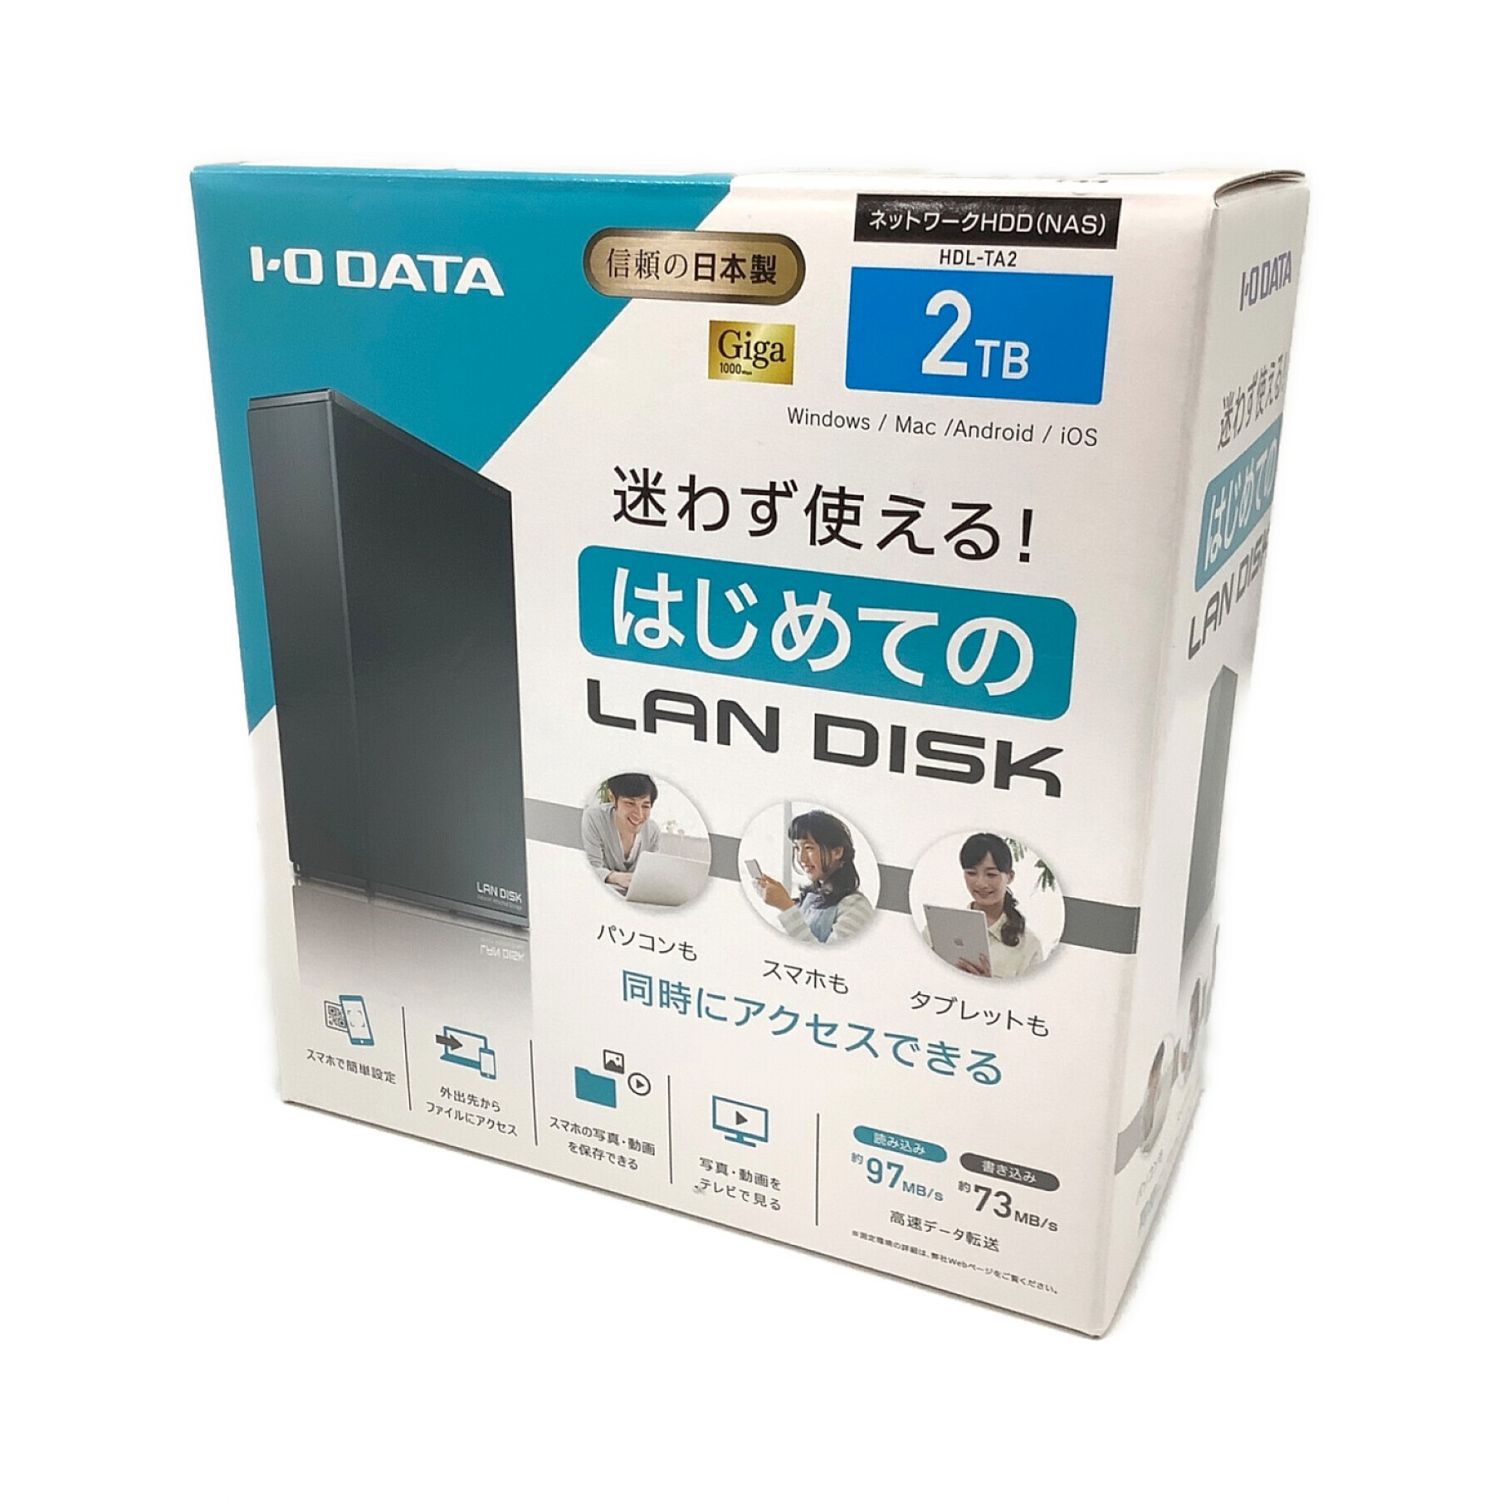 IODATA (アイオーデータ) ネットワーク接続ハードディスク(NAS) 2TB ...